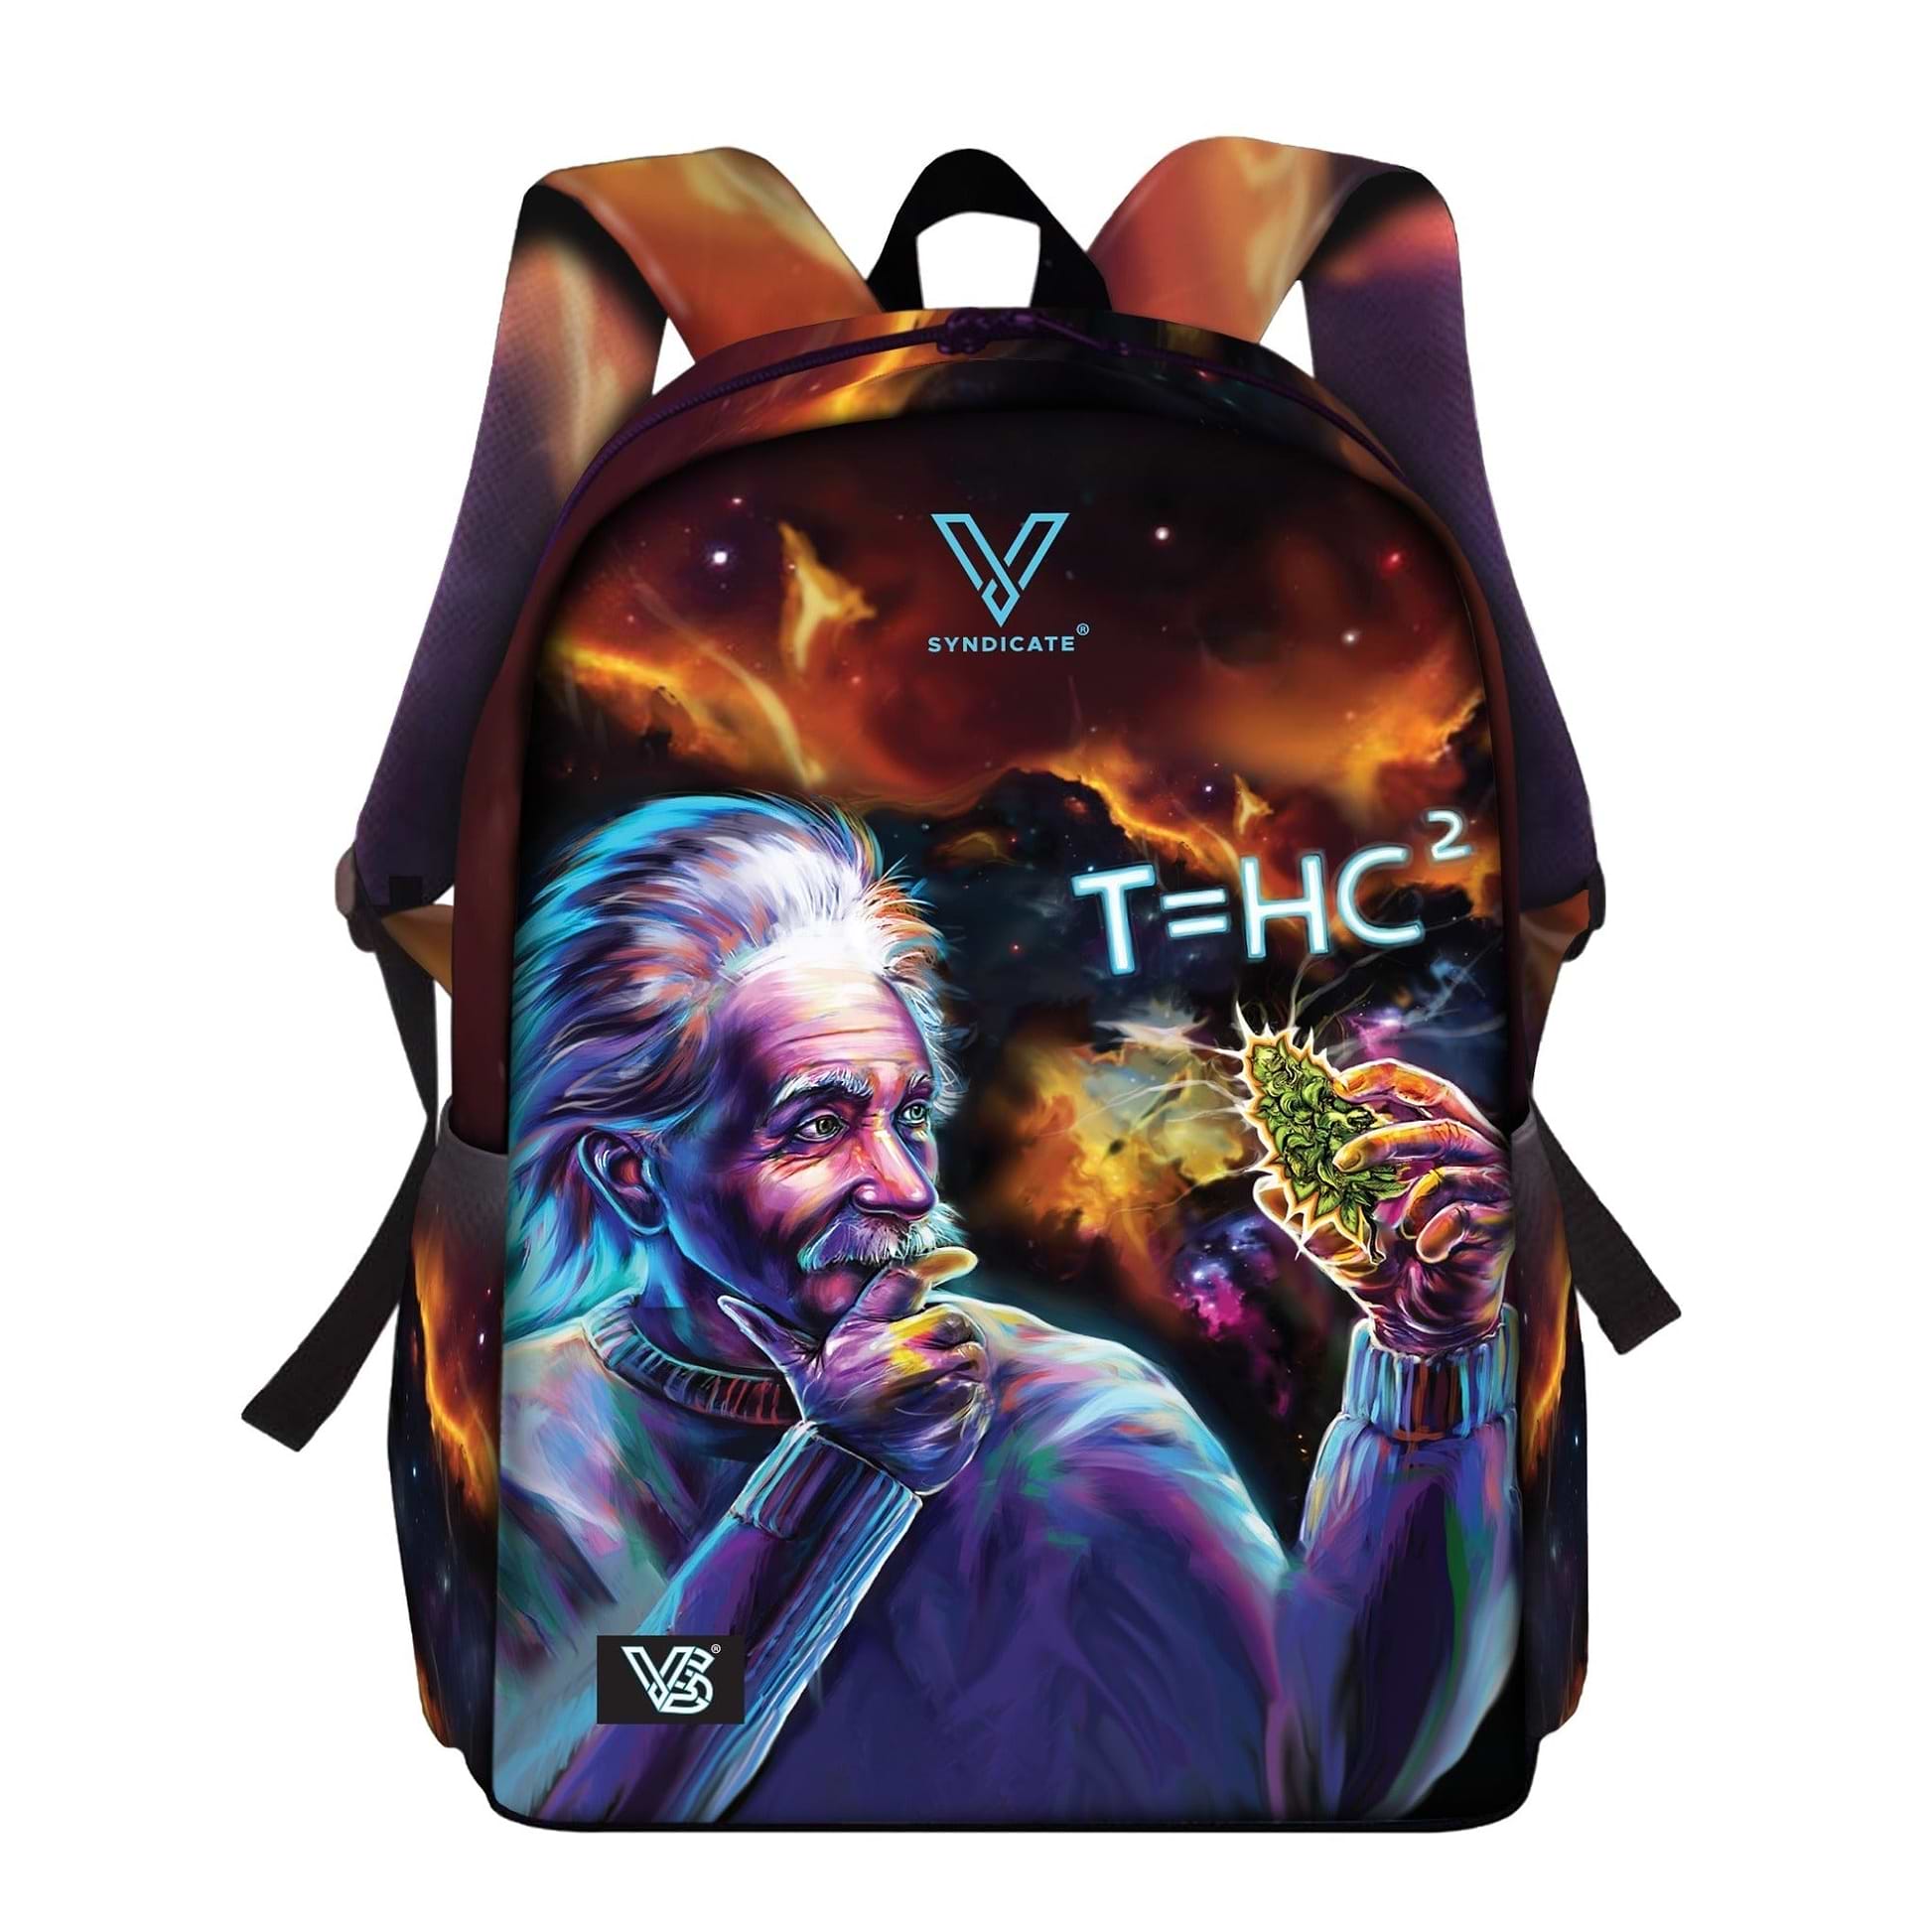 V Syndicate Backpack T=HC2 Einstein Black Hole